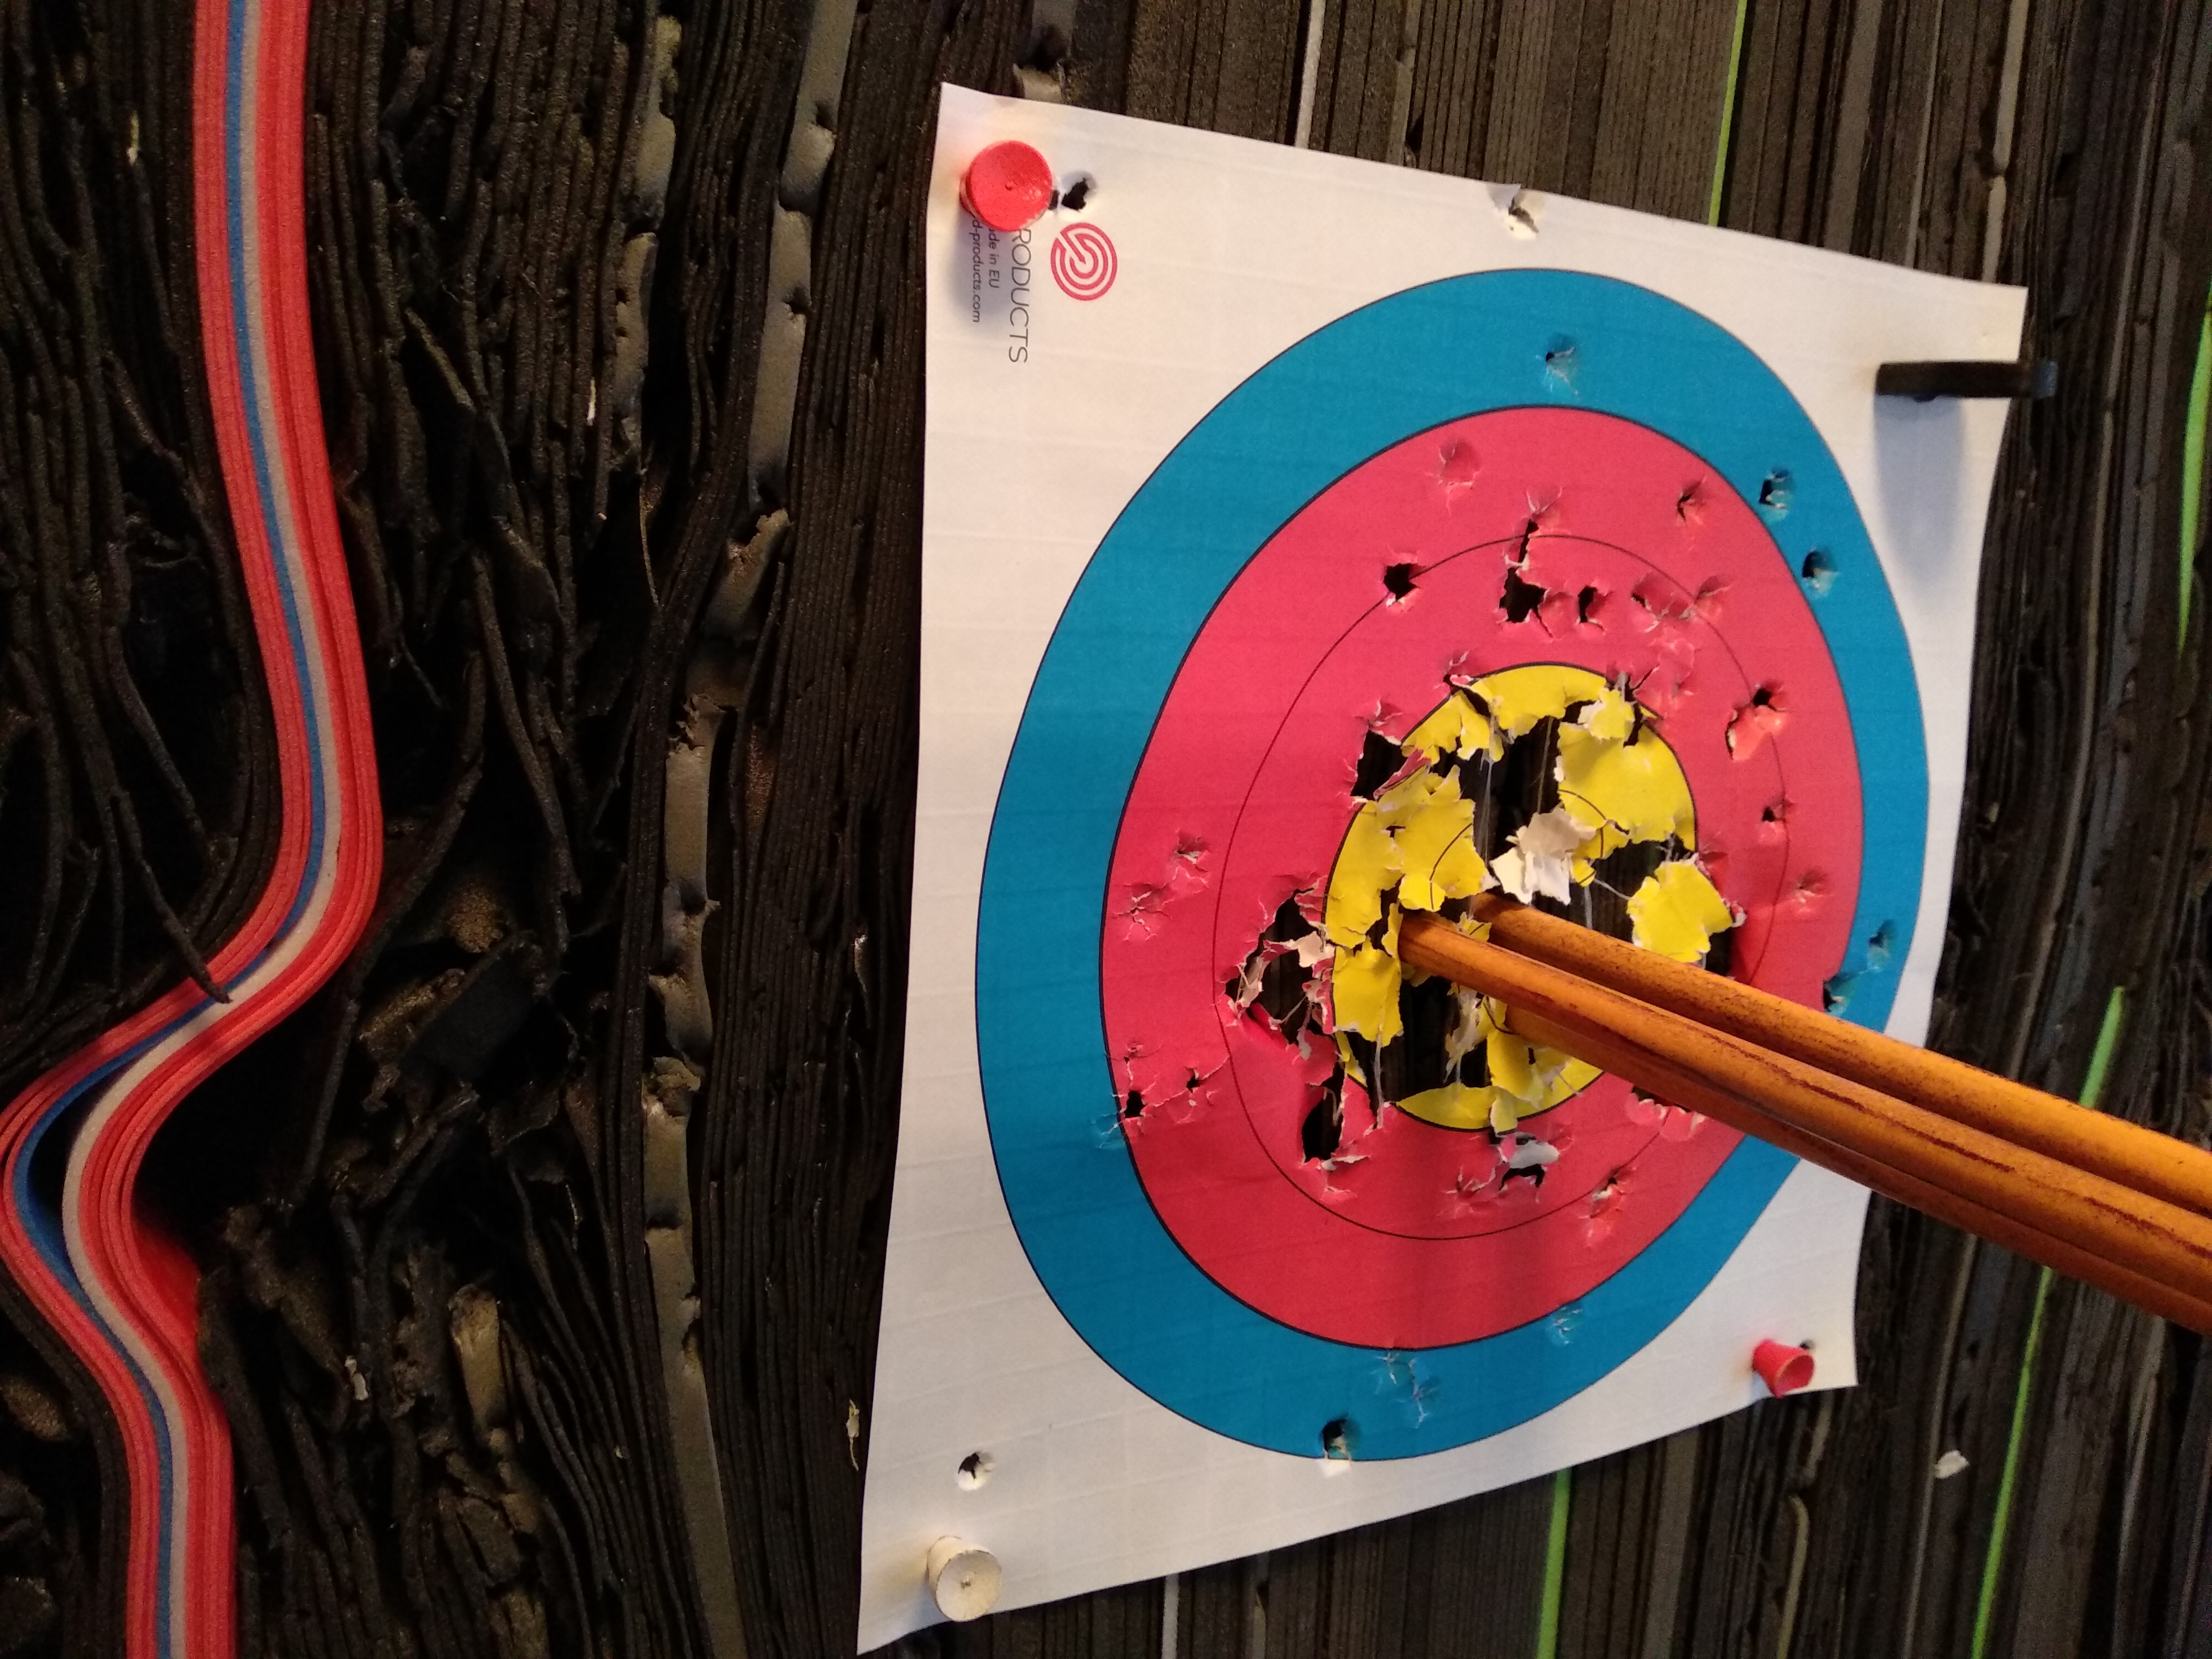 Archery Target Reparation | Old Bald Man